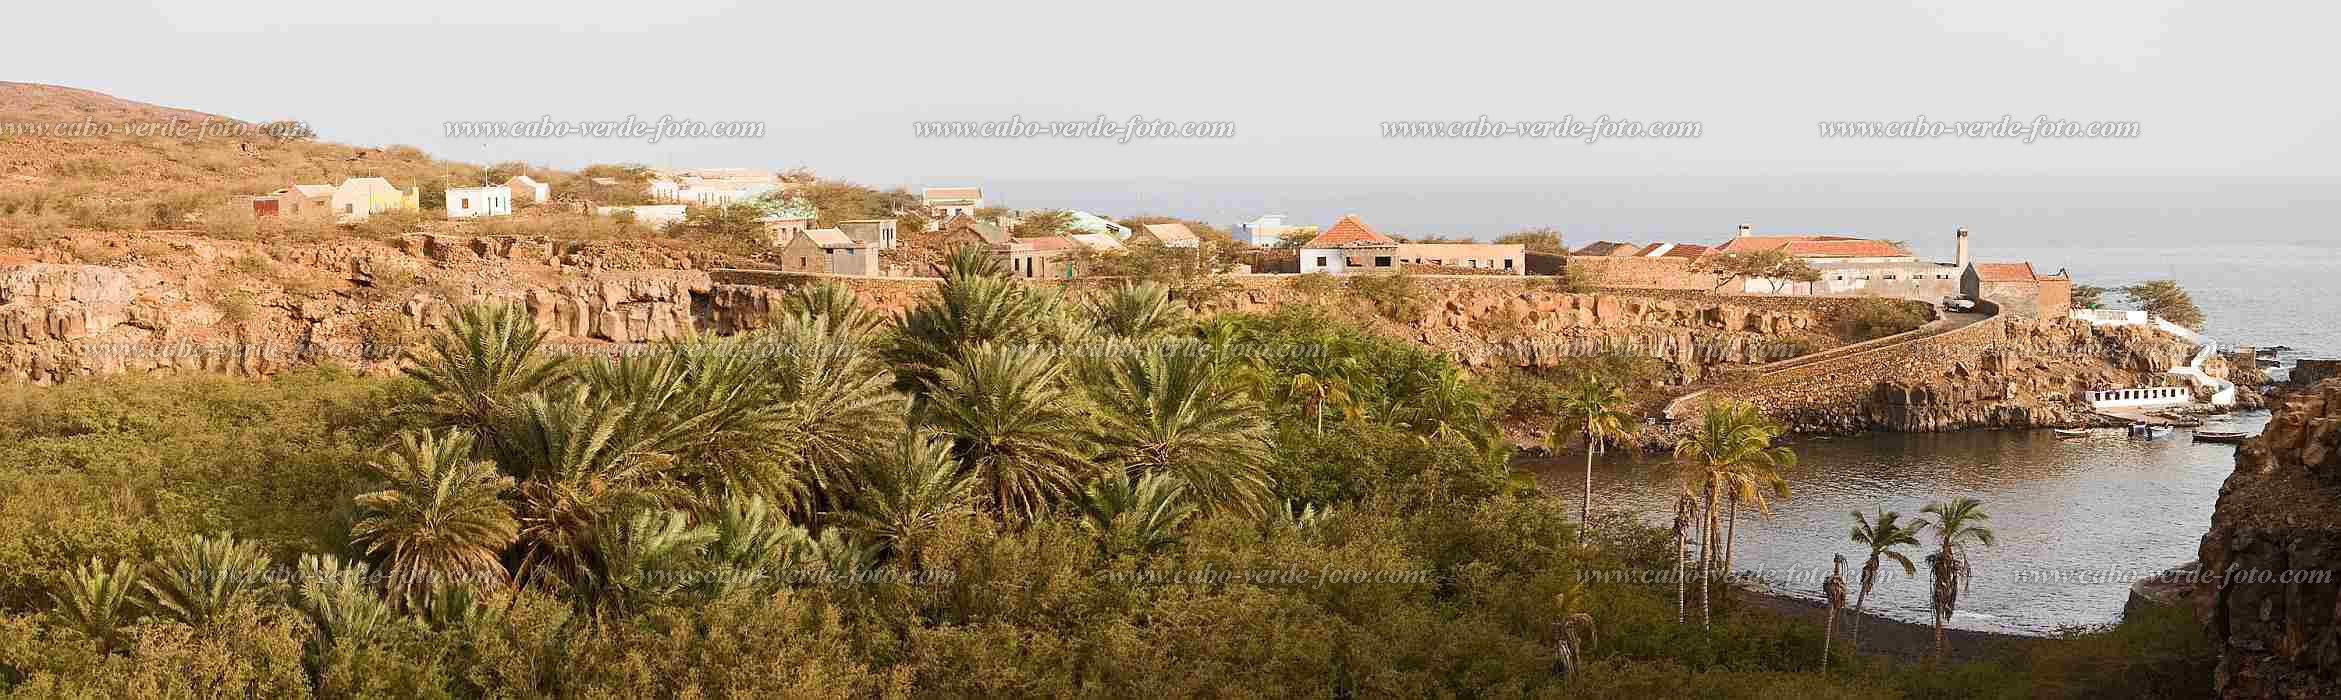 So Nicolau : Carrical :  : Landscape SeaCabo Verde Foto Gallery